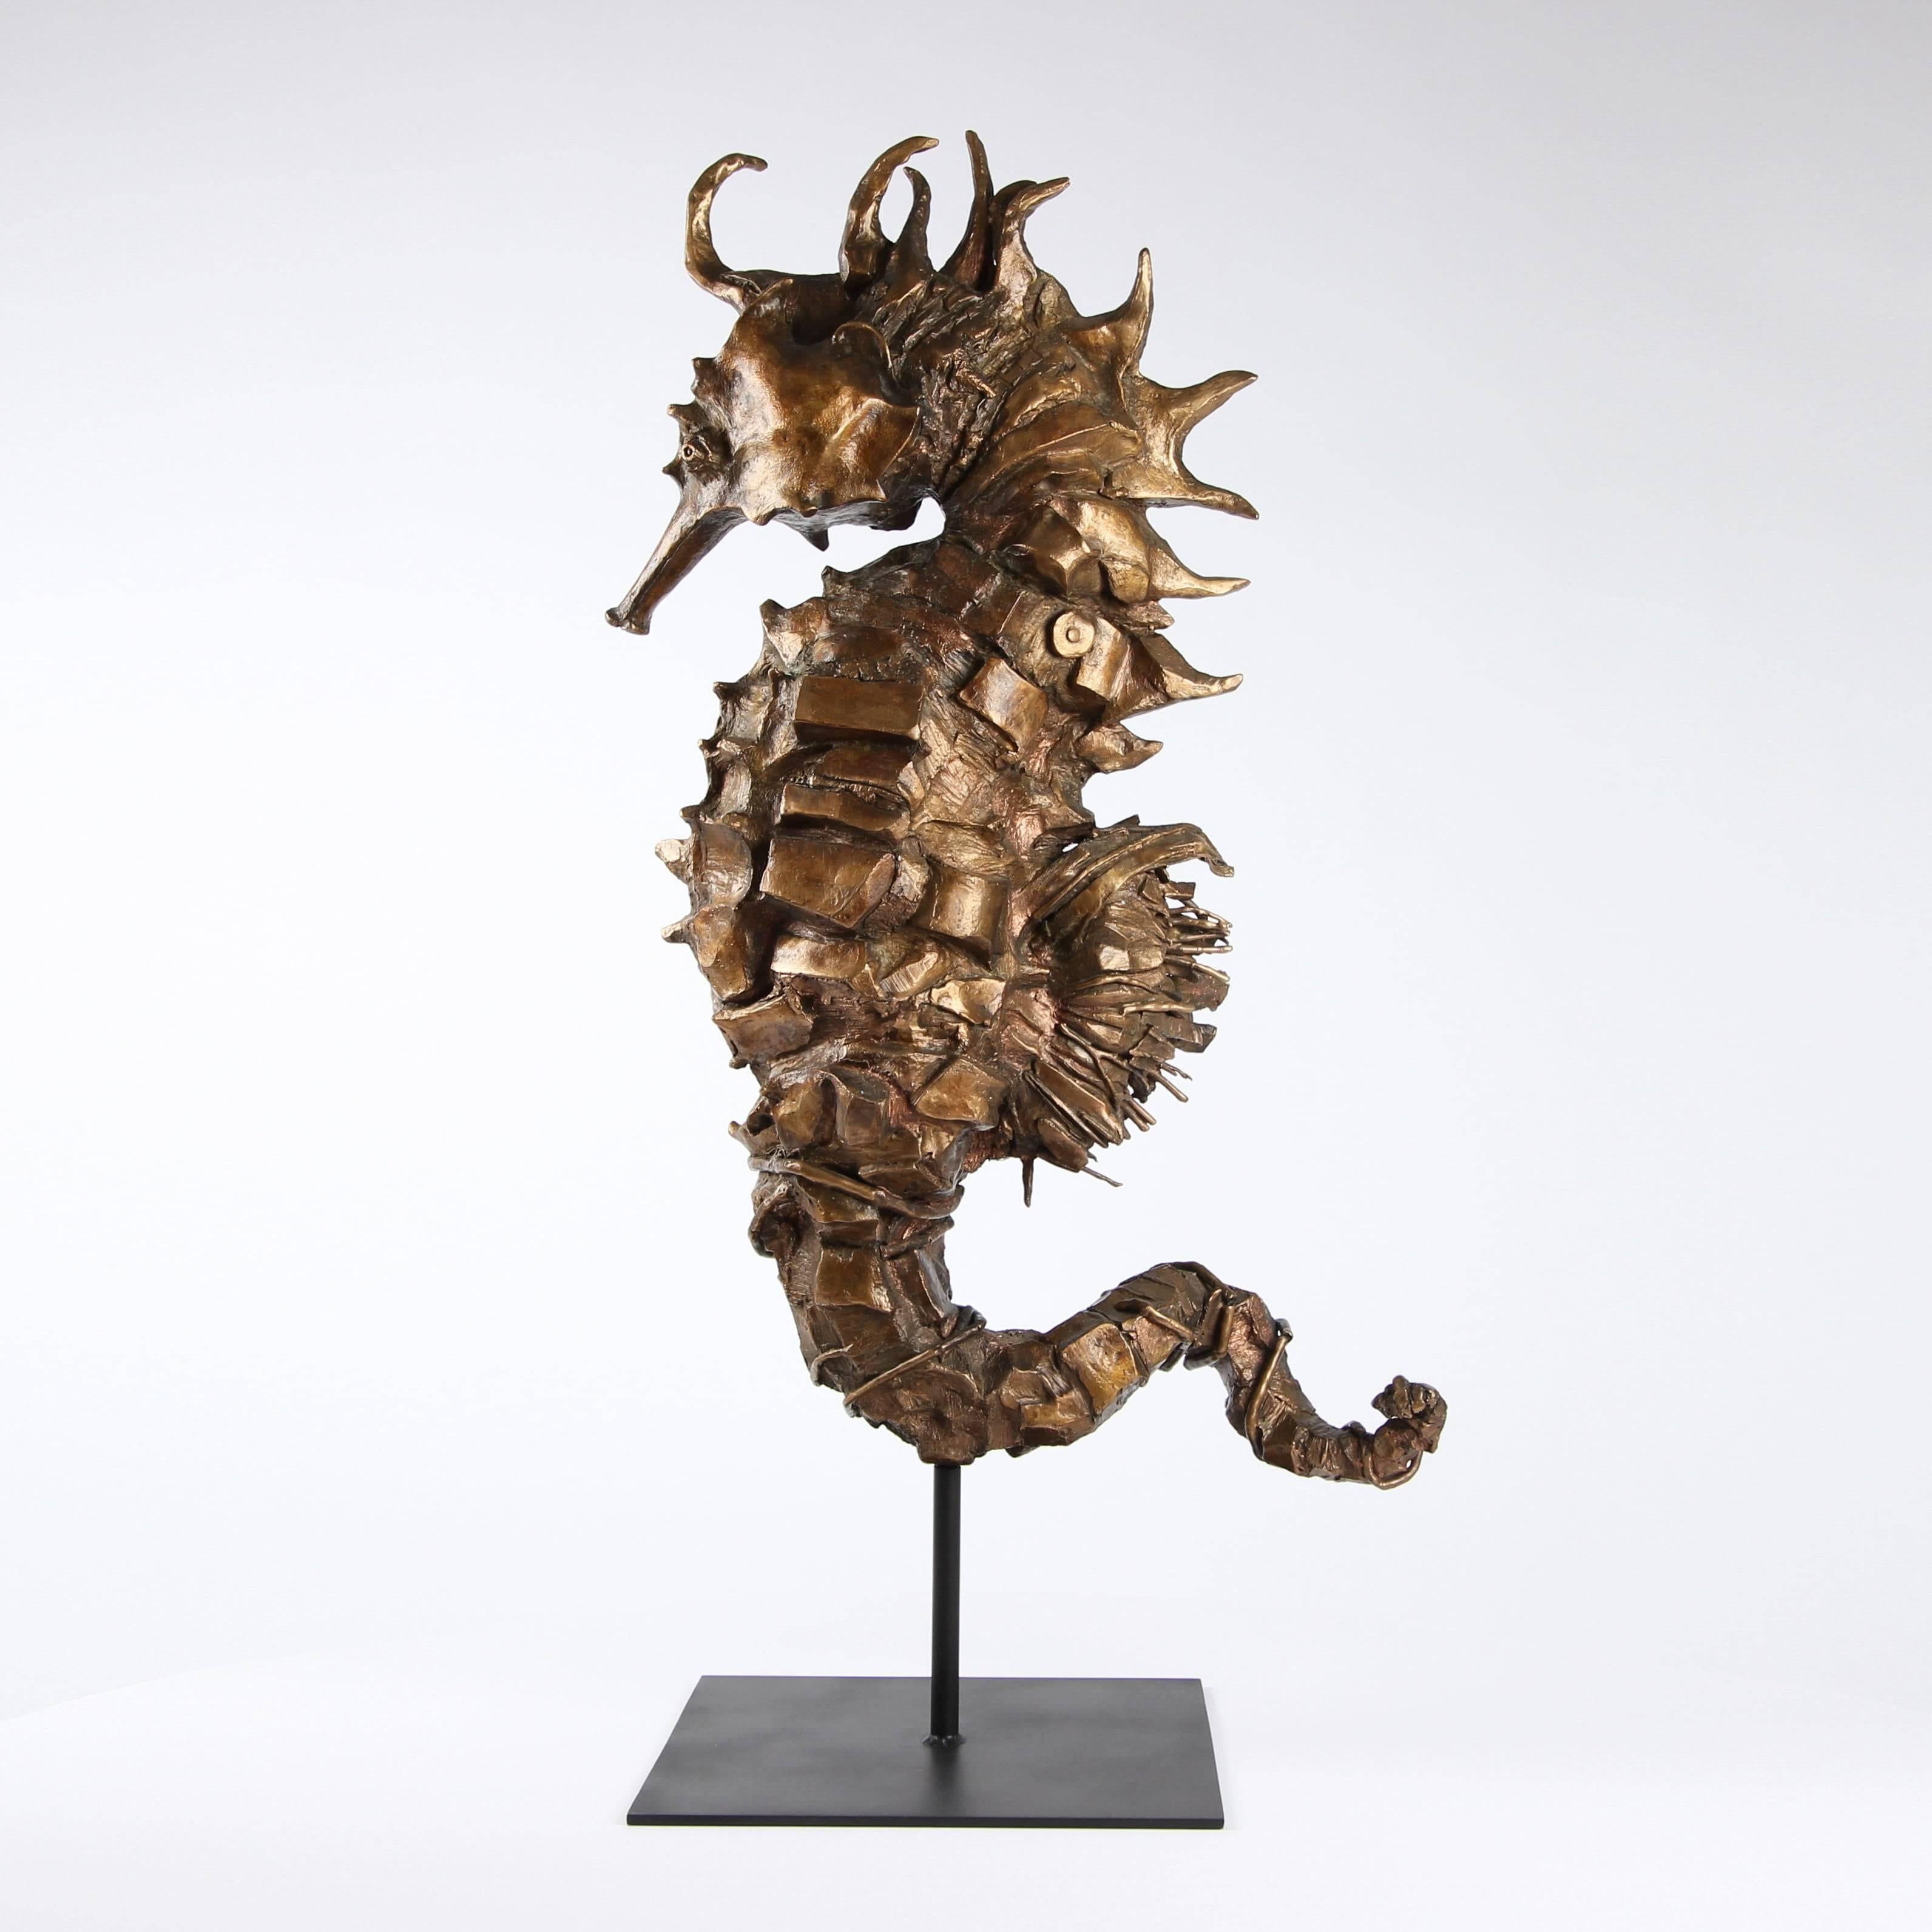 Seahorse Rex Gold by Chésade - Sealife bronze sculpture, sea animal For Sale 4